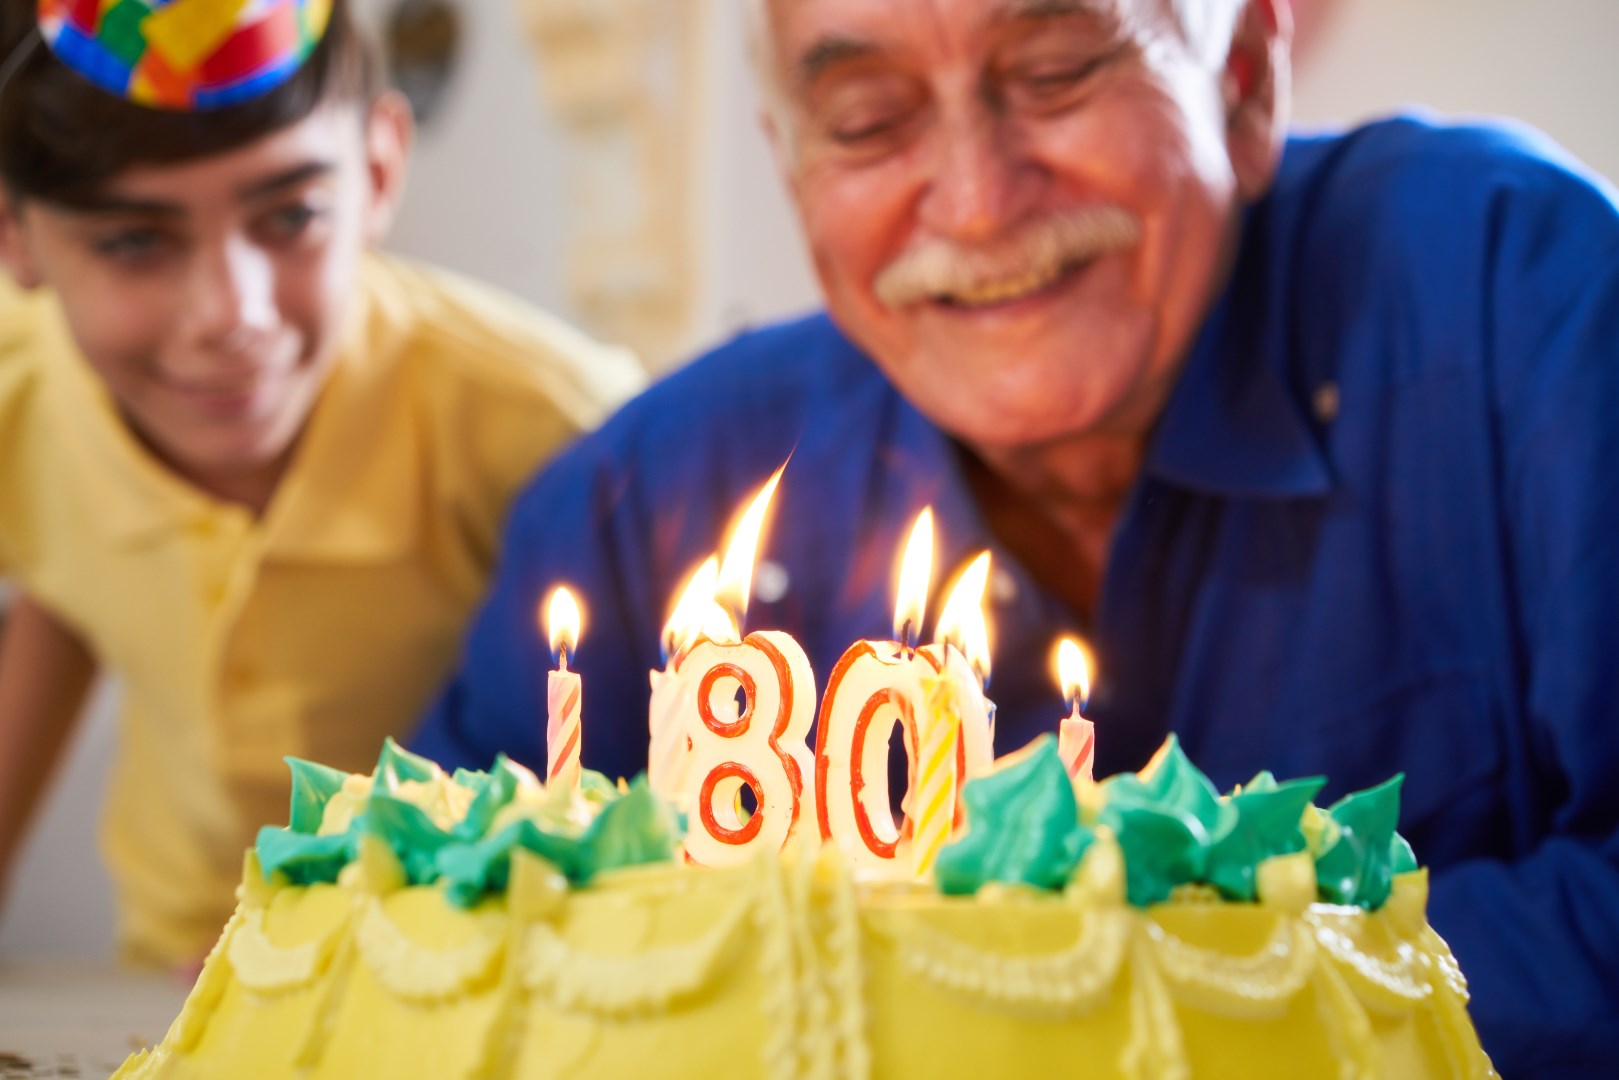 boy and senior man blowing candles on cake birthda 2021 08 26 15 46 10 utc